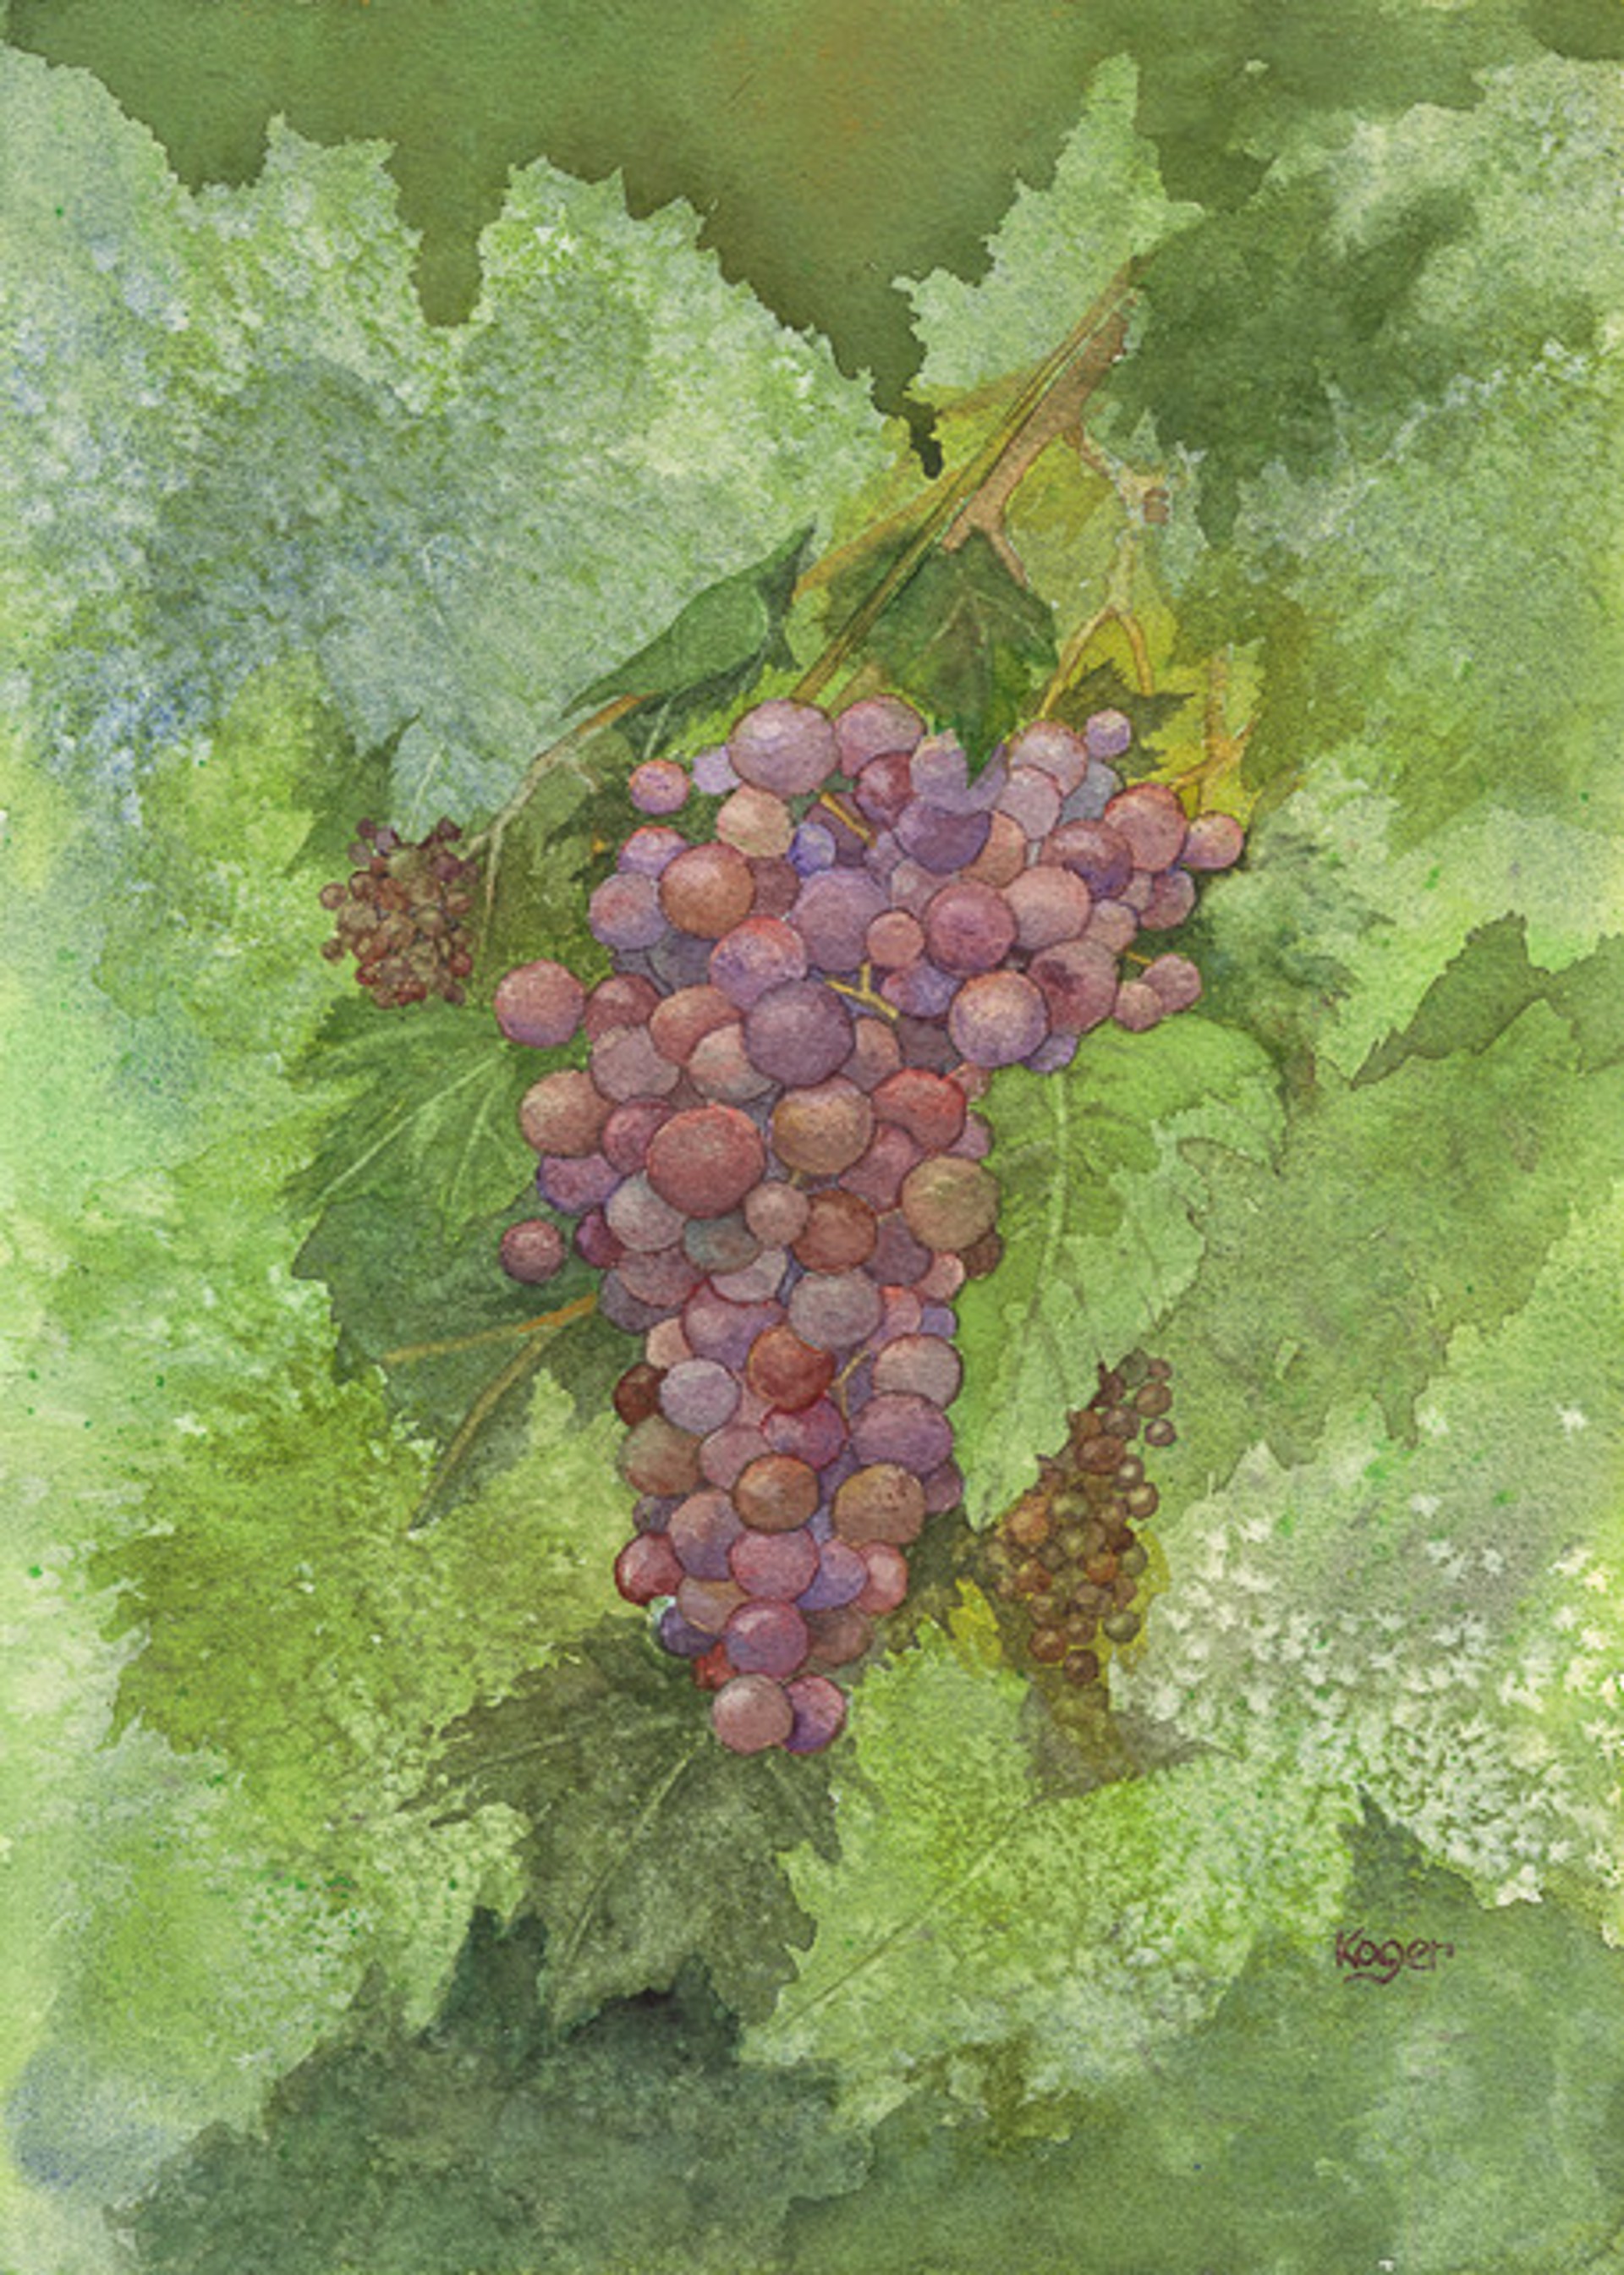 Ripening on the Vine by Bill Koger